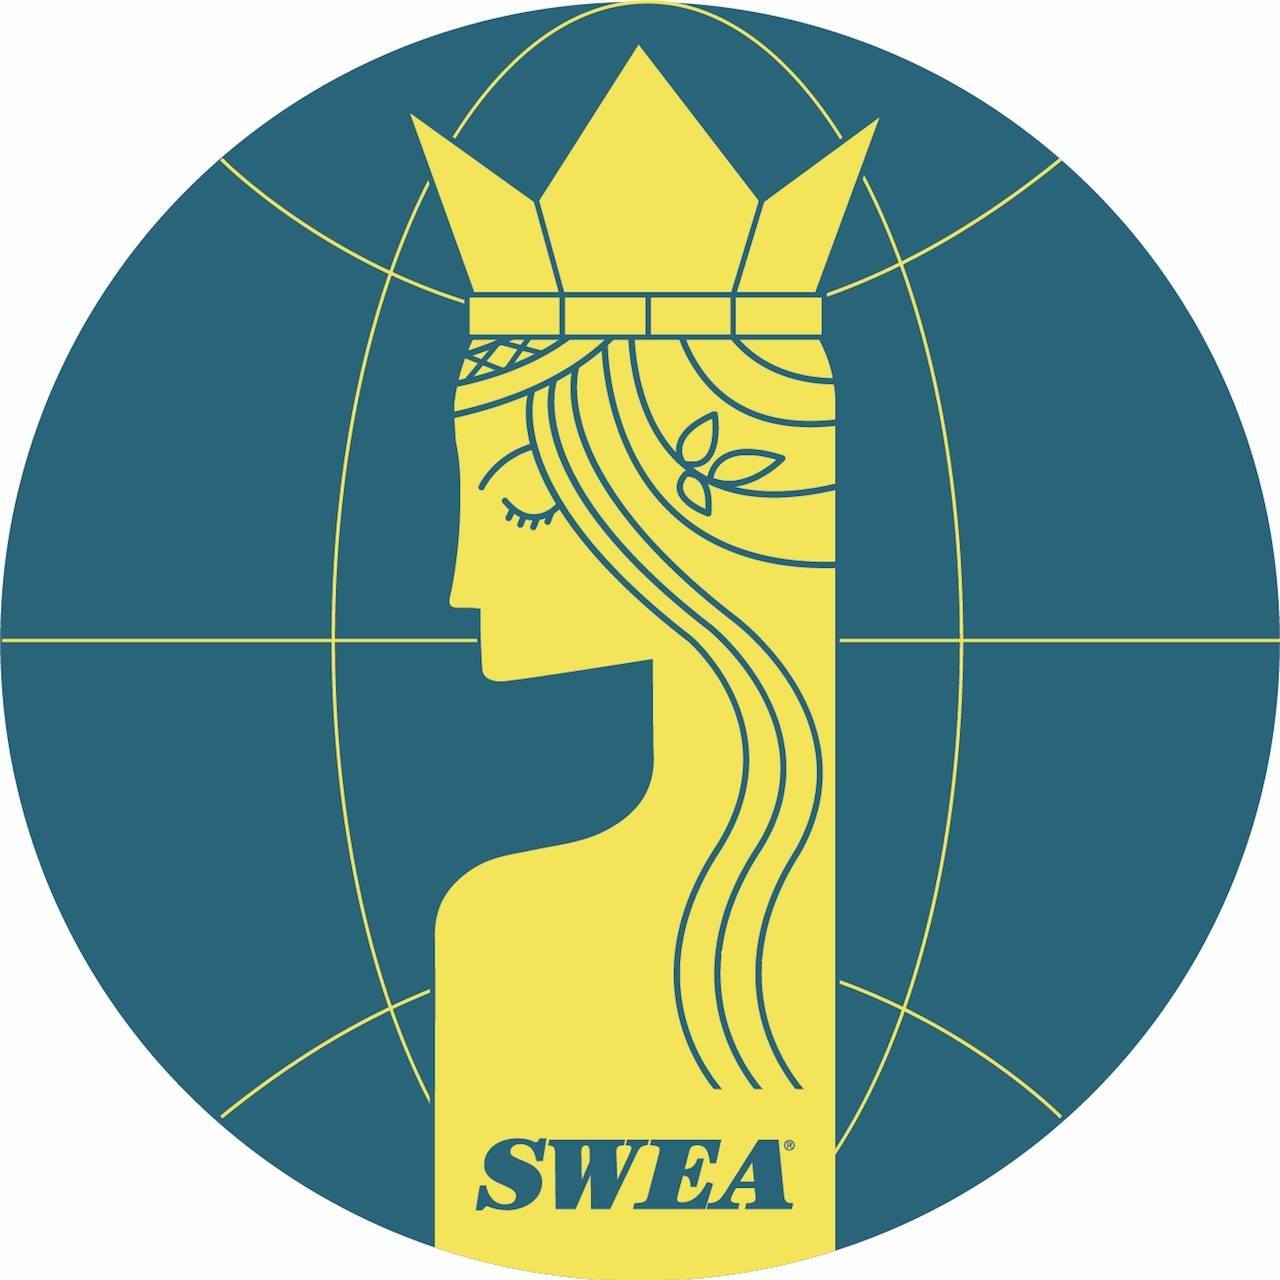 Swedish Organization in Fallbrook California - Swedish Women’s Educational Association San Diego